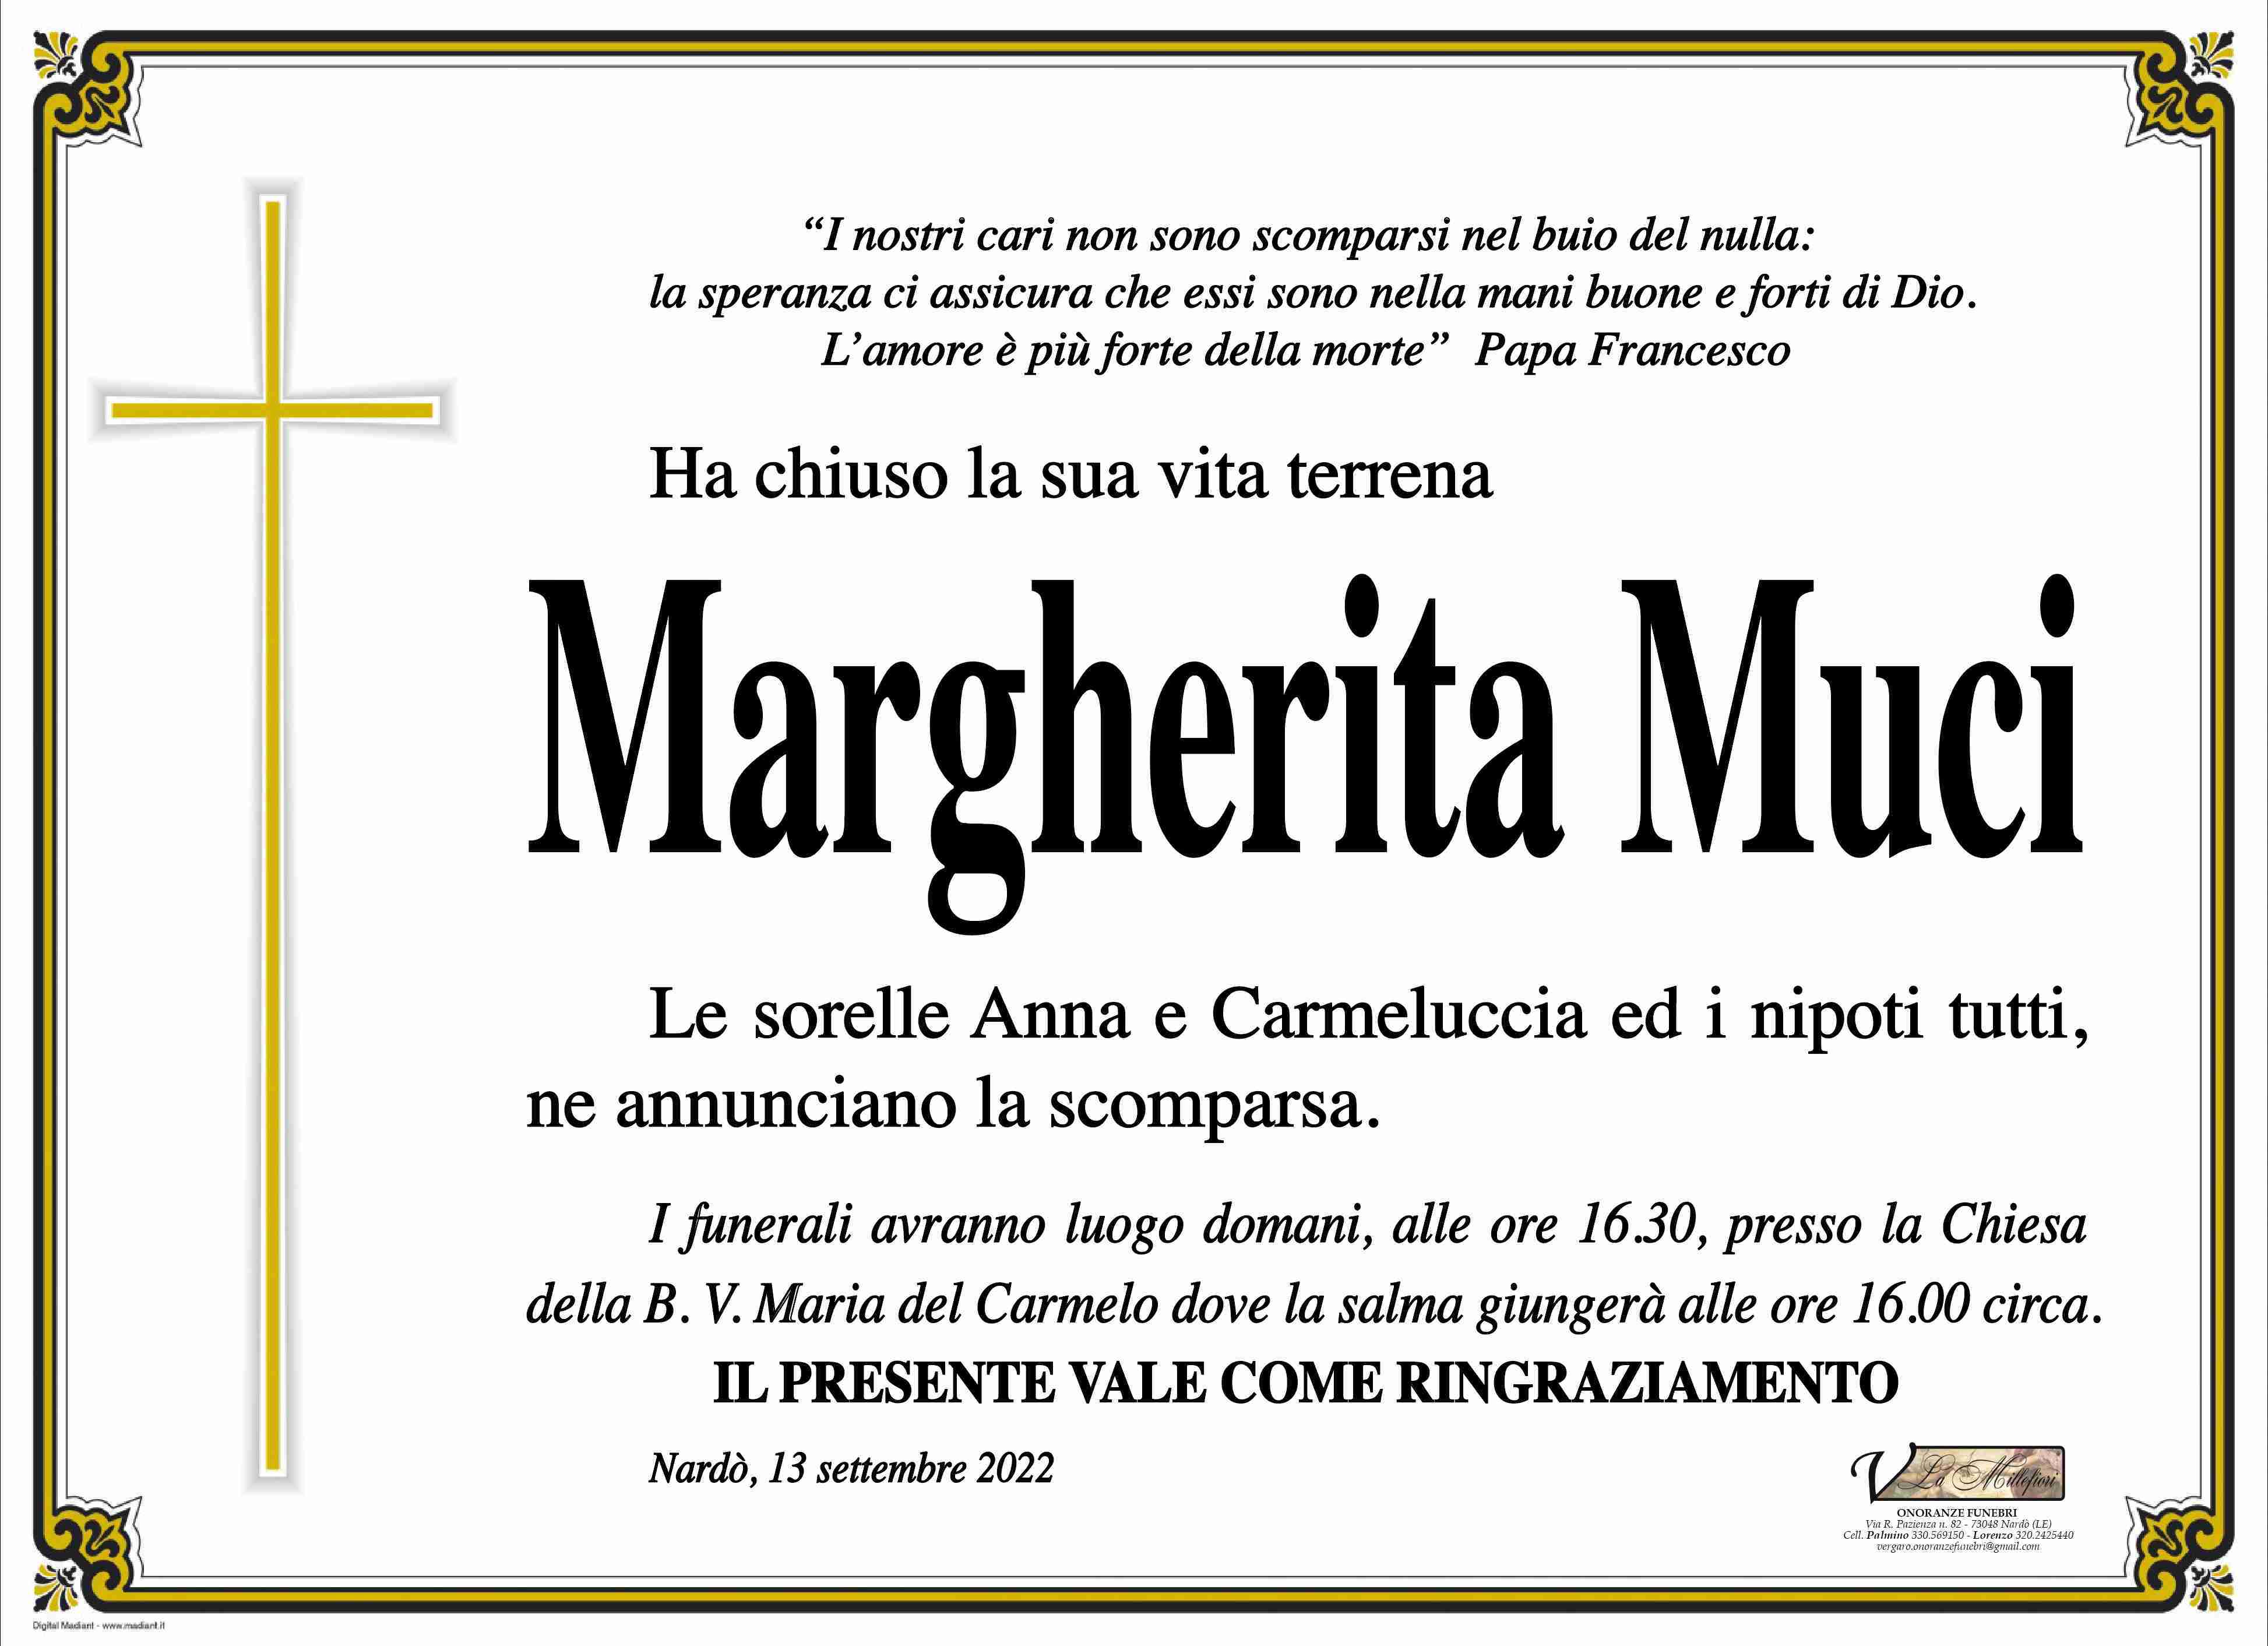 Margherita Muci